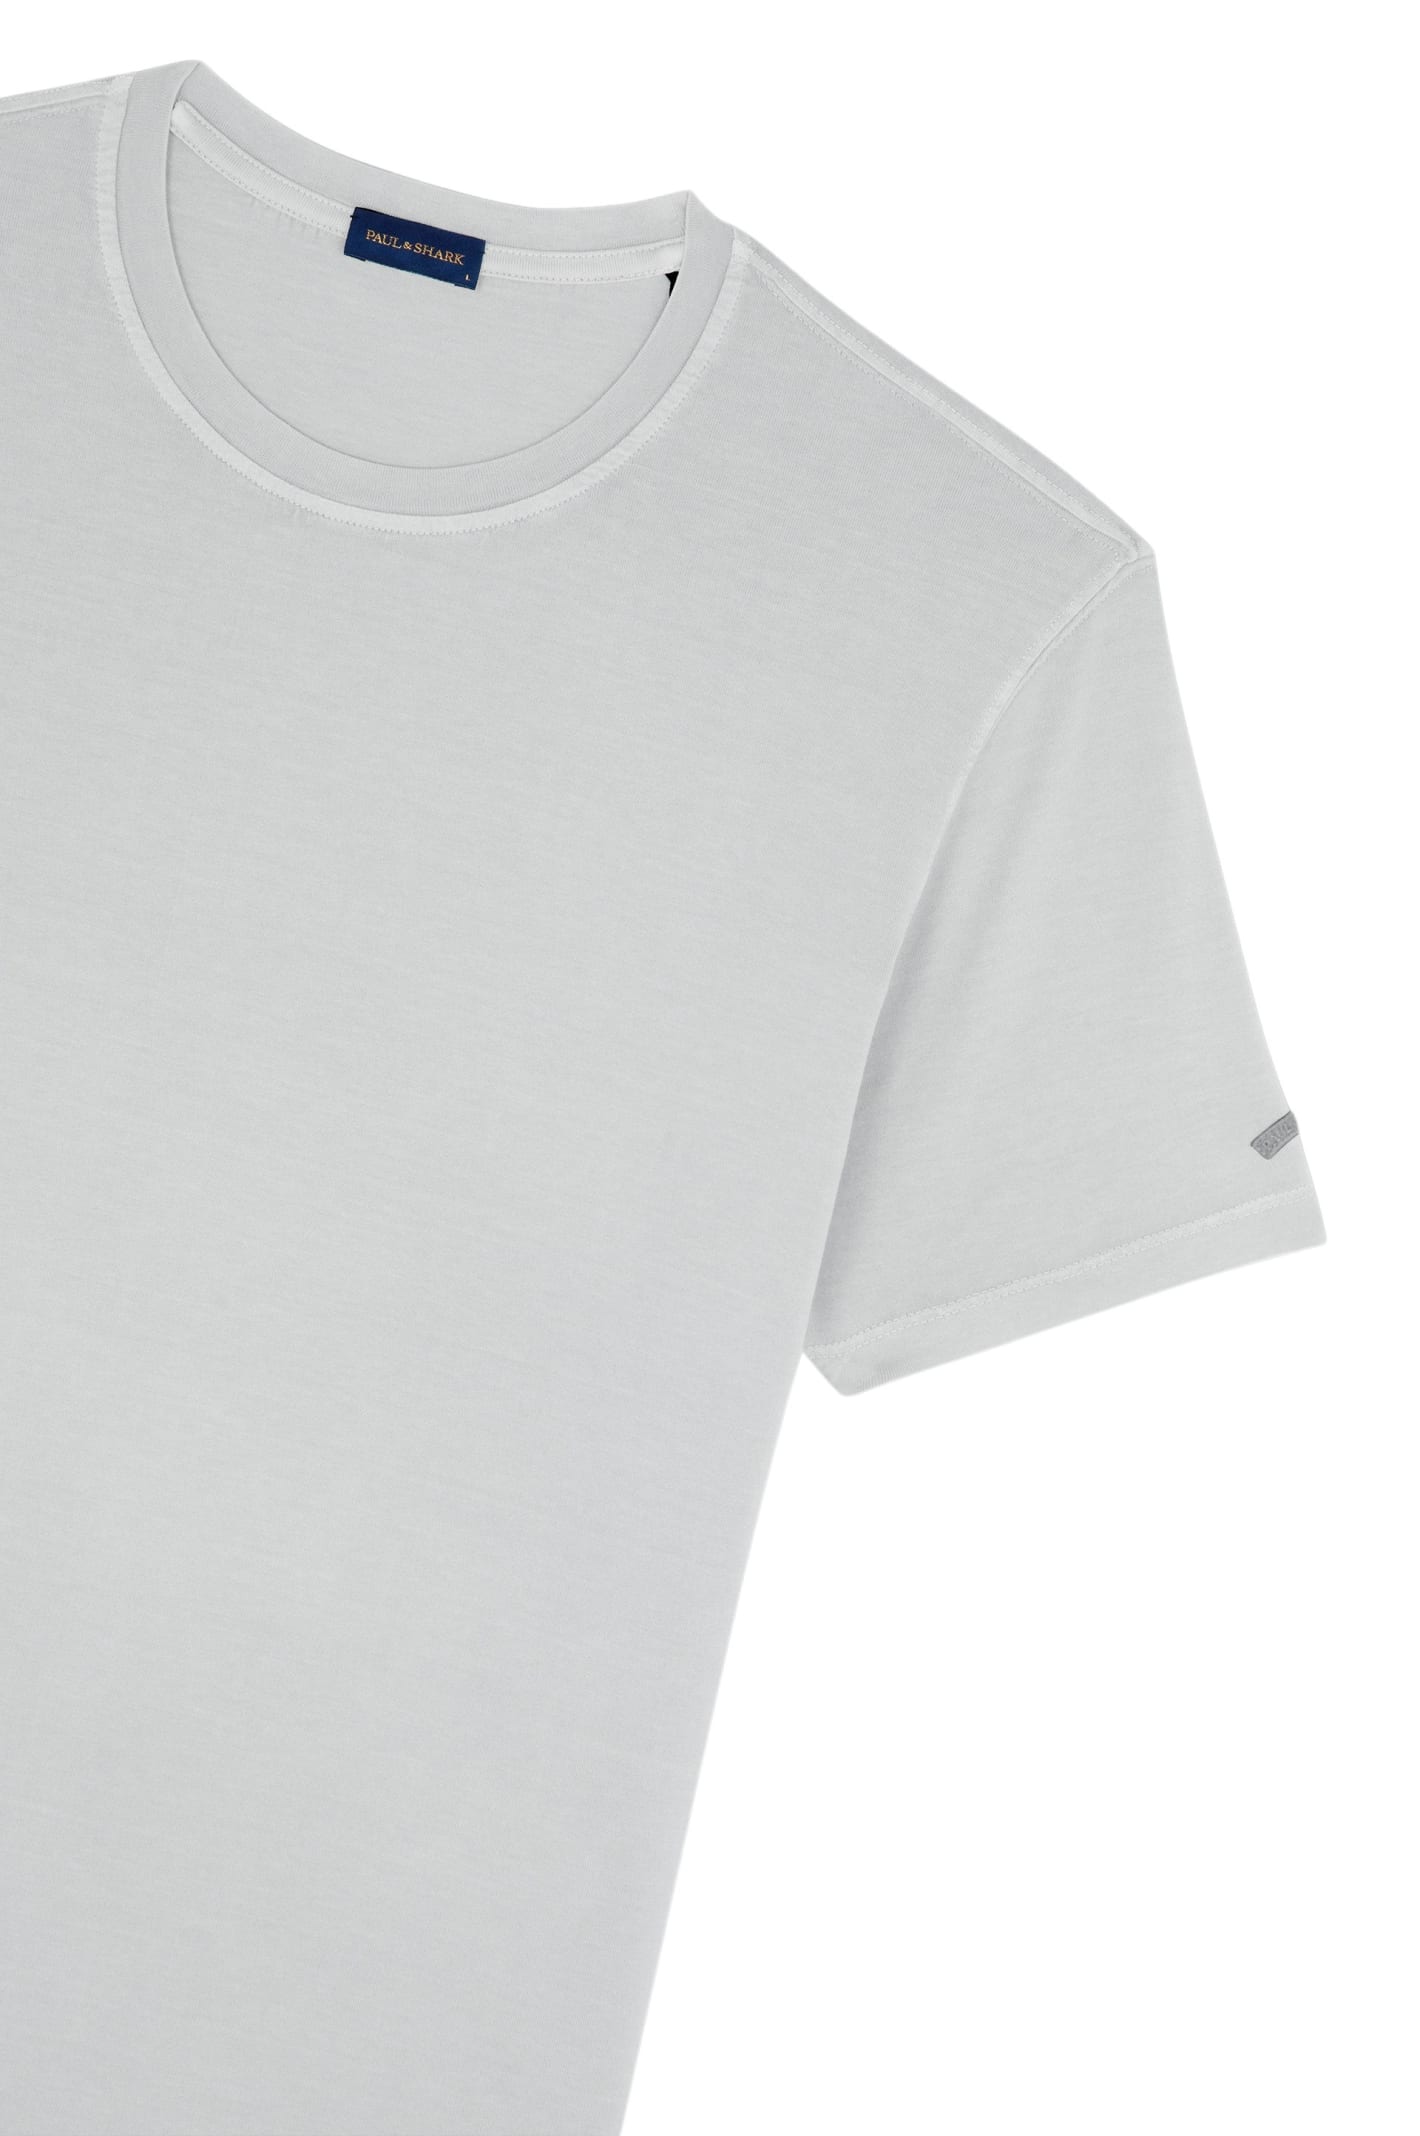 Shop Paul&amp;shark Tshirt In White